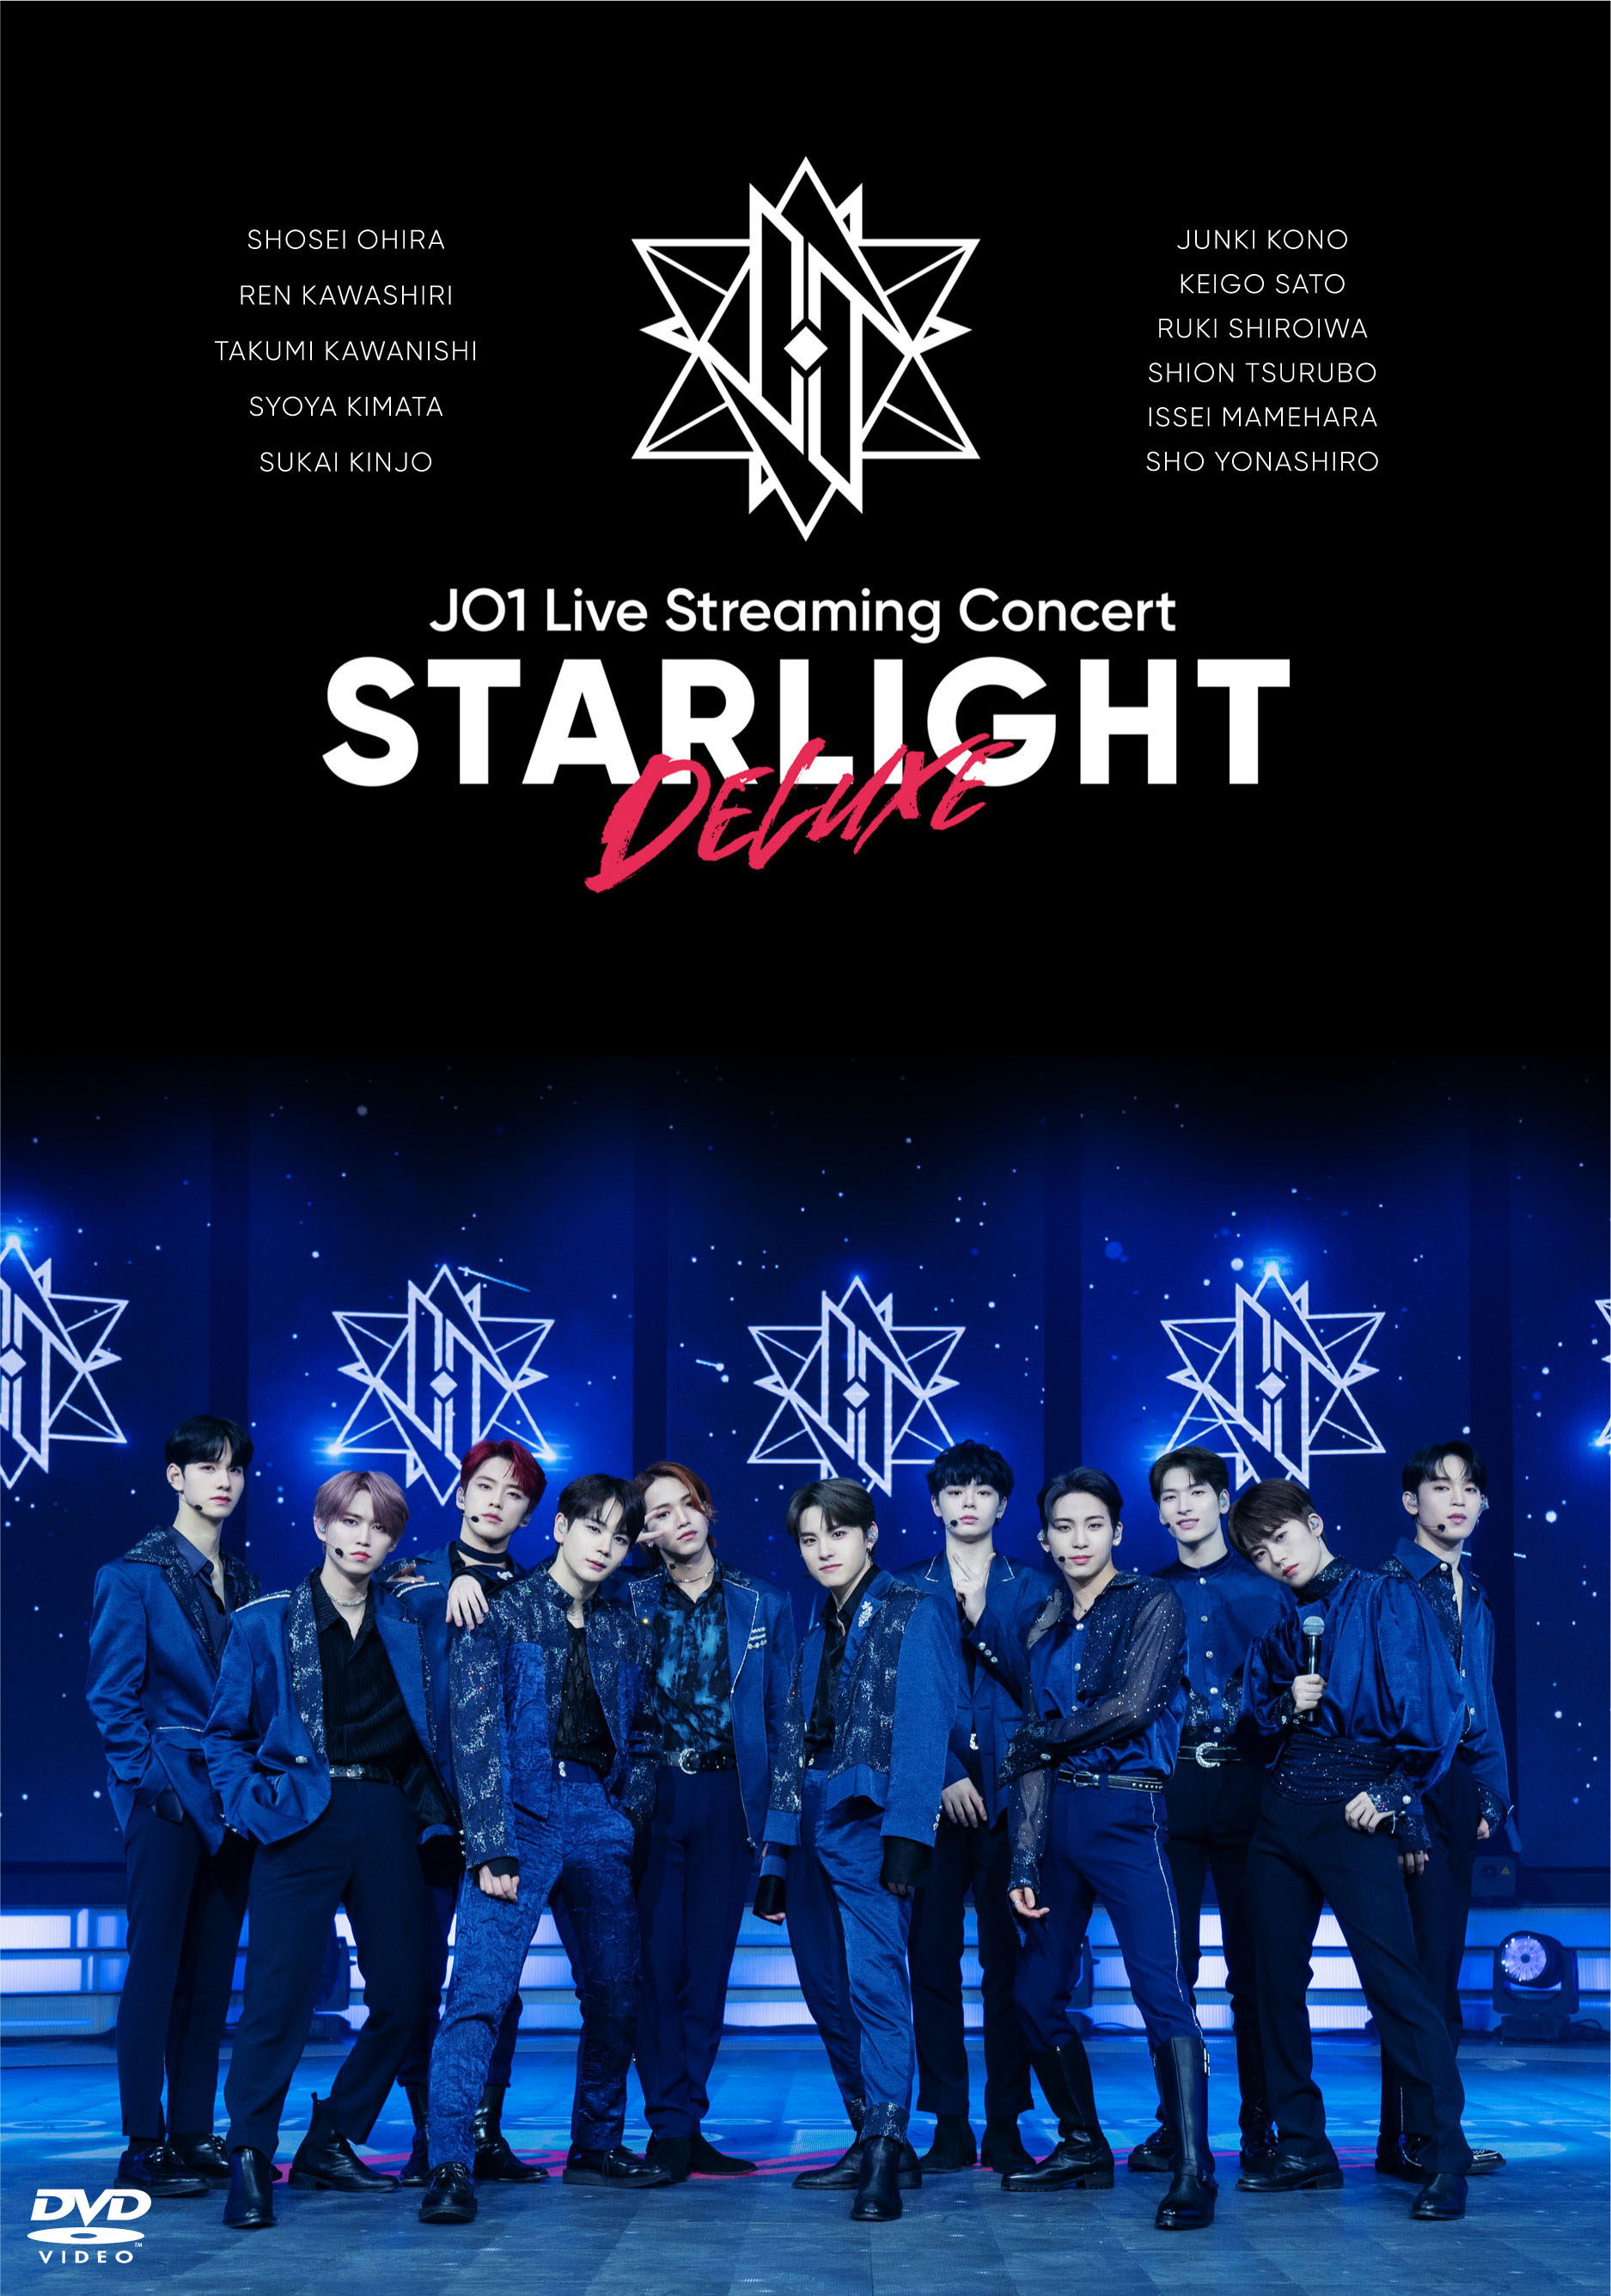 JO1 Live Streaming Concert 『STARLIGHT DELUXE』DVD